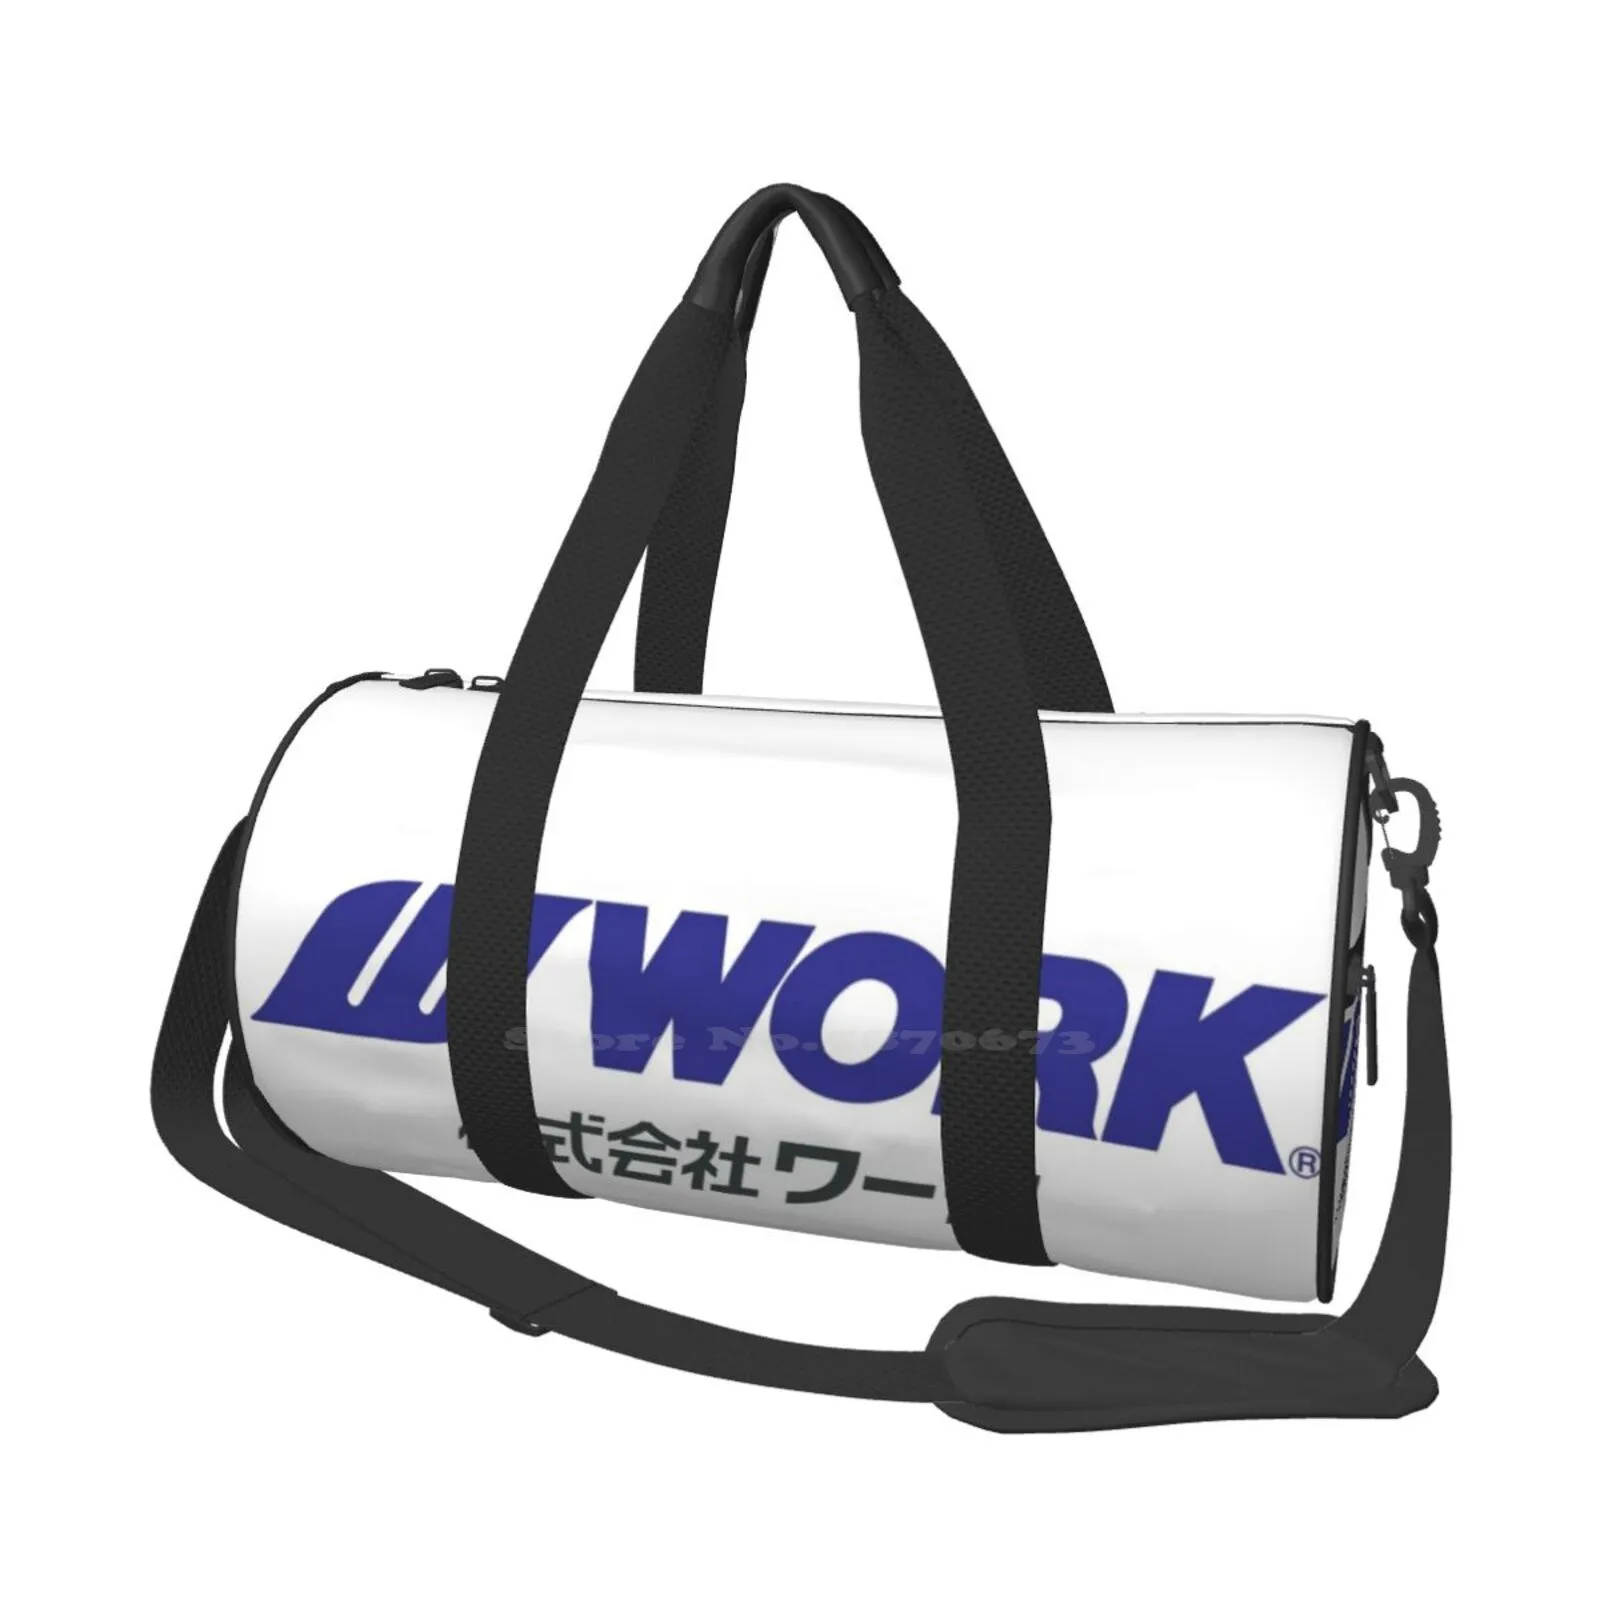 

Work Wheels - Jdm Shoulder Bag Casual Satchel For Sport Travel School Work Wheels Stance Jdm Drift Illest Nissan S15 S13